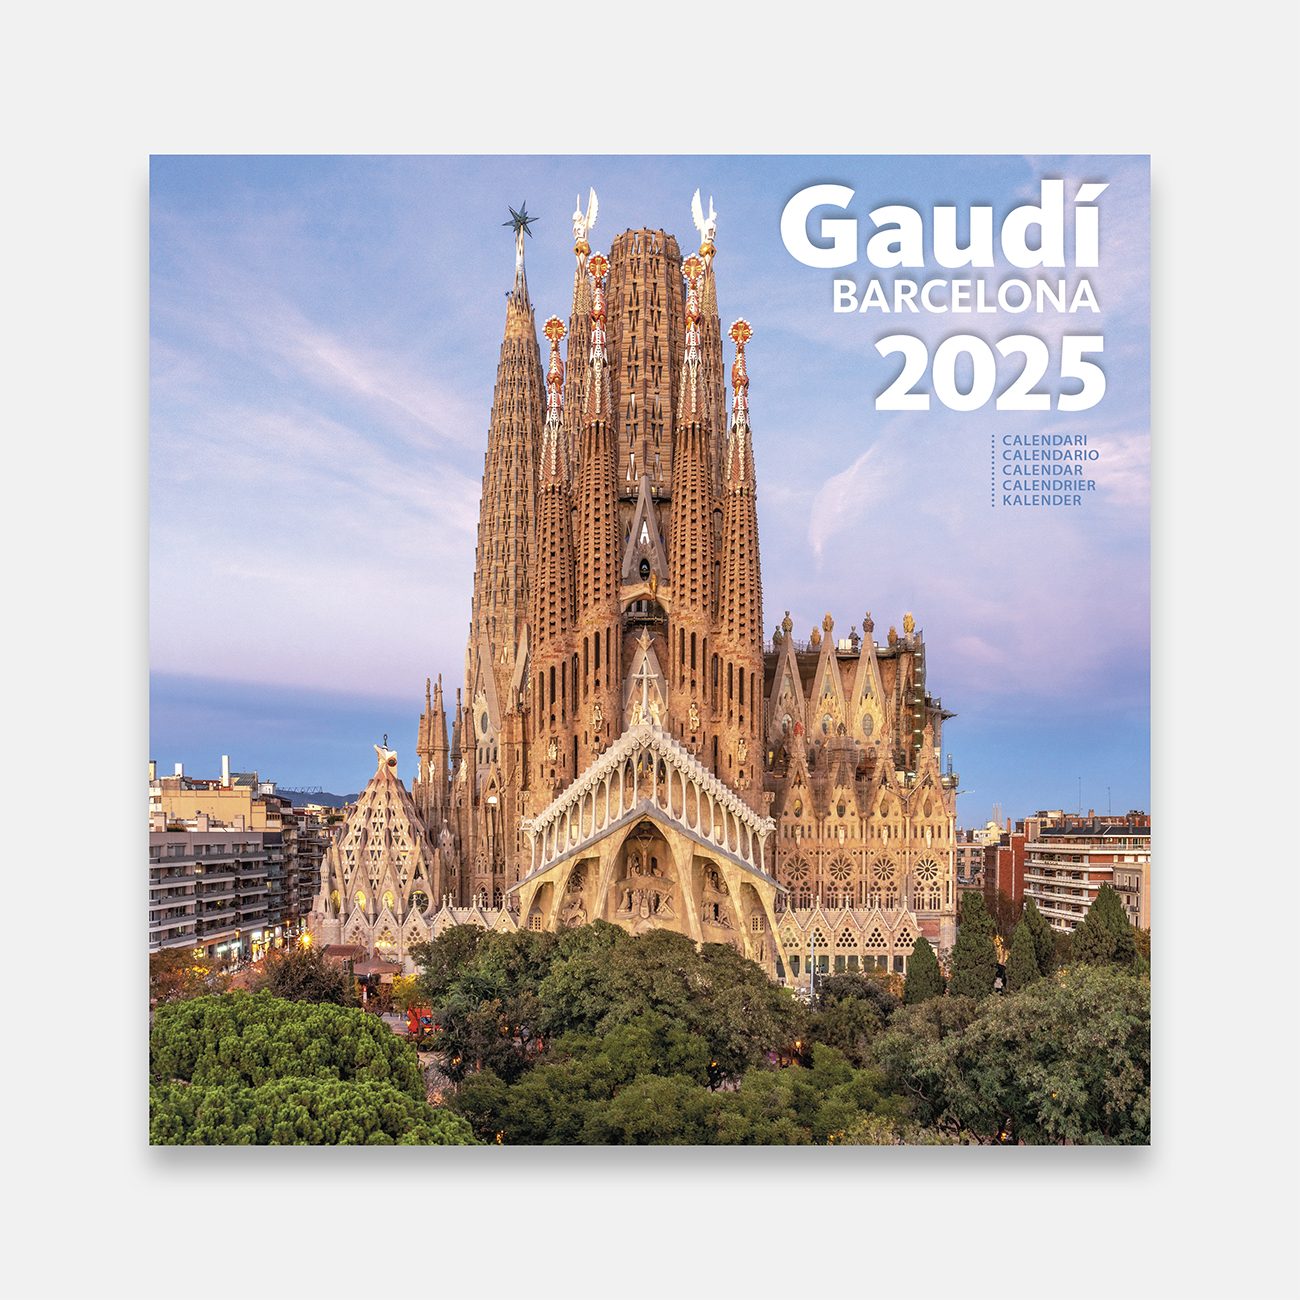 Calendar 2025 Gaudí (Sagrada Família) 25g1 b calendario pared 2025 gaudi sagrada familia